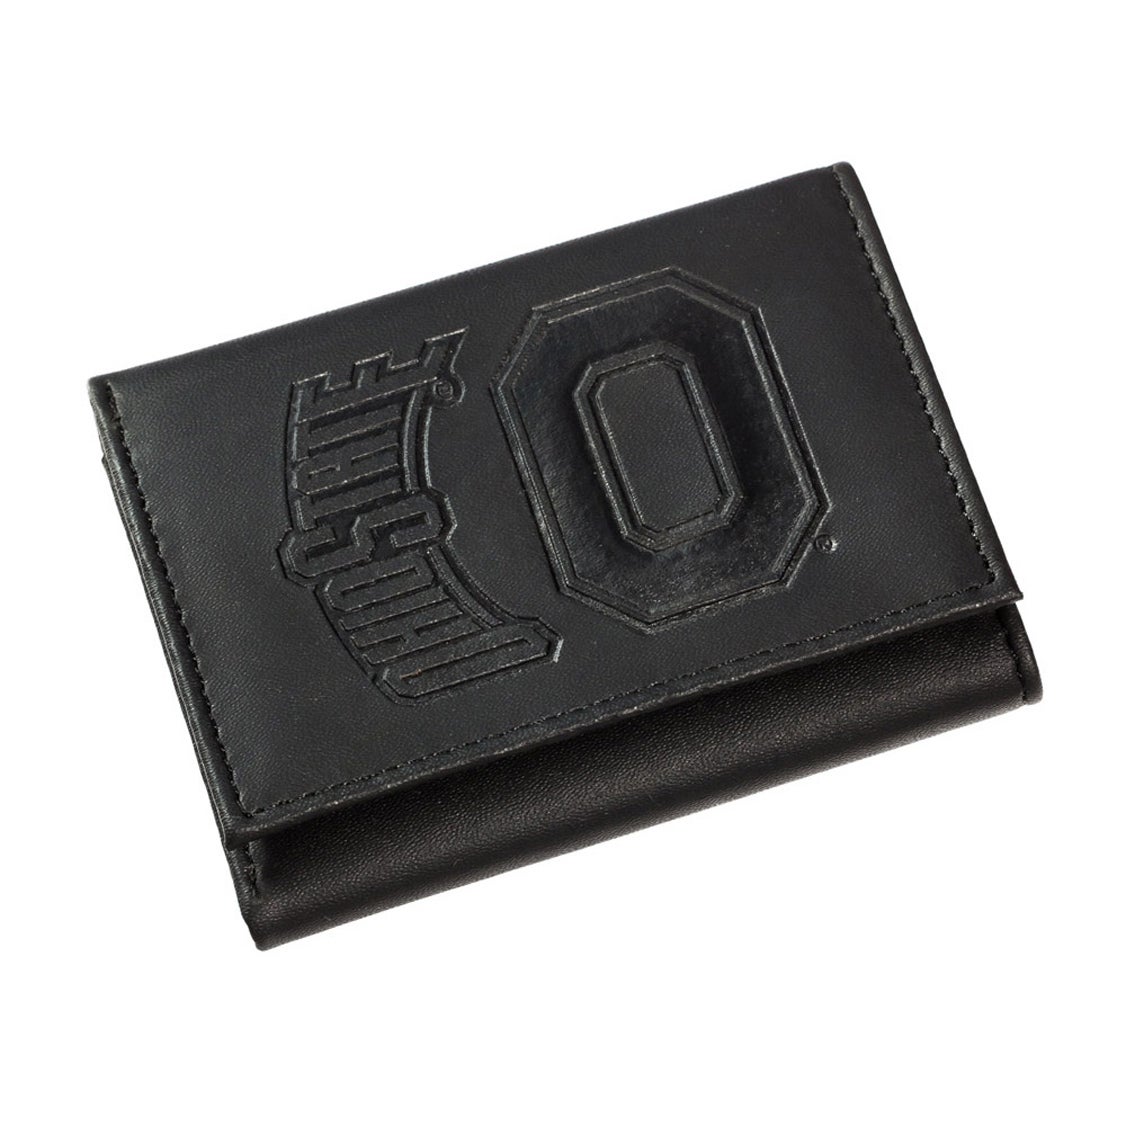 Ohio State University Tri-Fold Leather Wallet